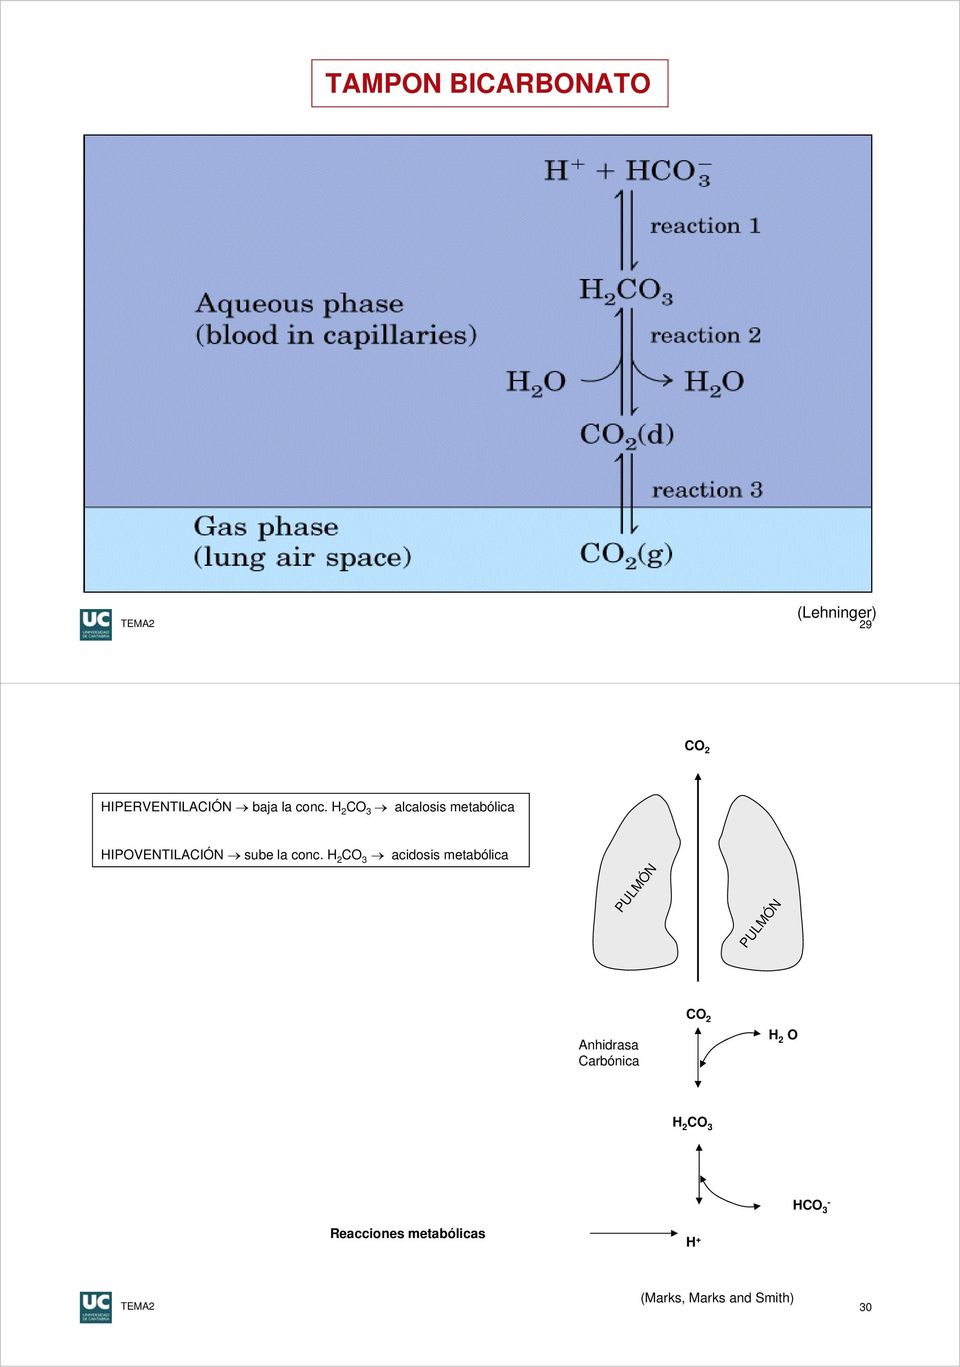 H 2 CO 3 acidosis metabólica PULMÓN PULMÓN Anhidrasa Carbónica CO 2 H 2